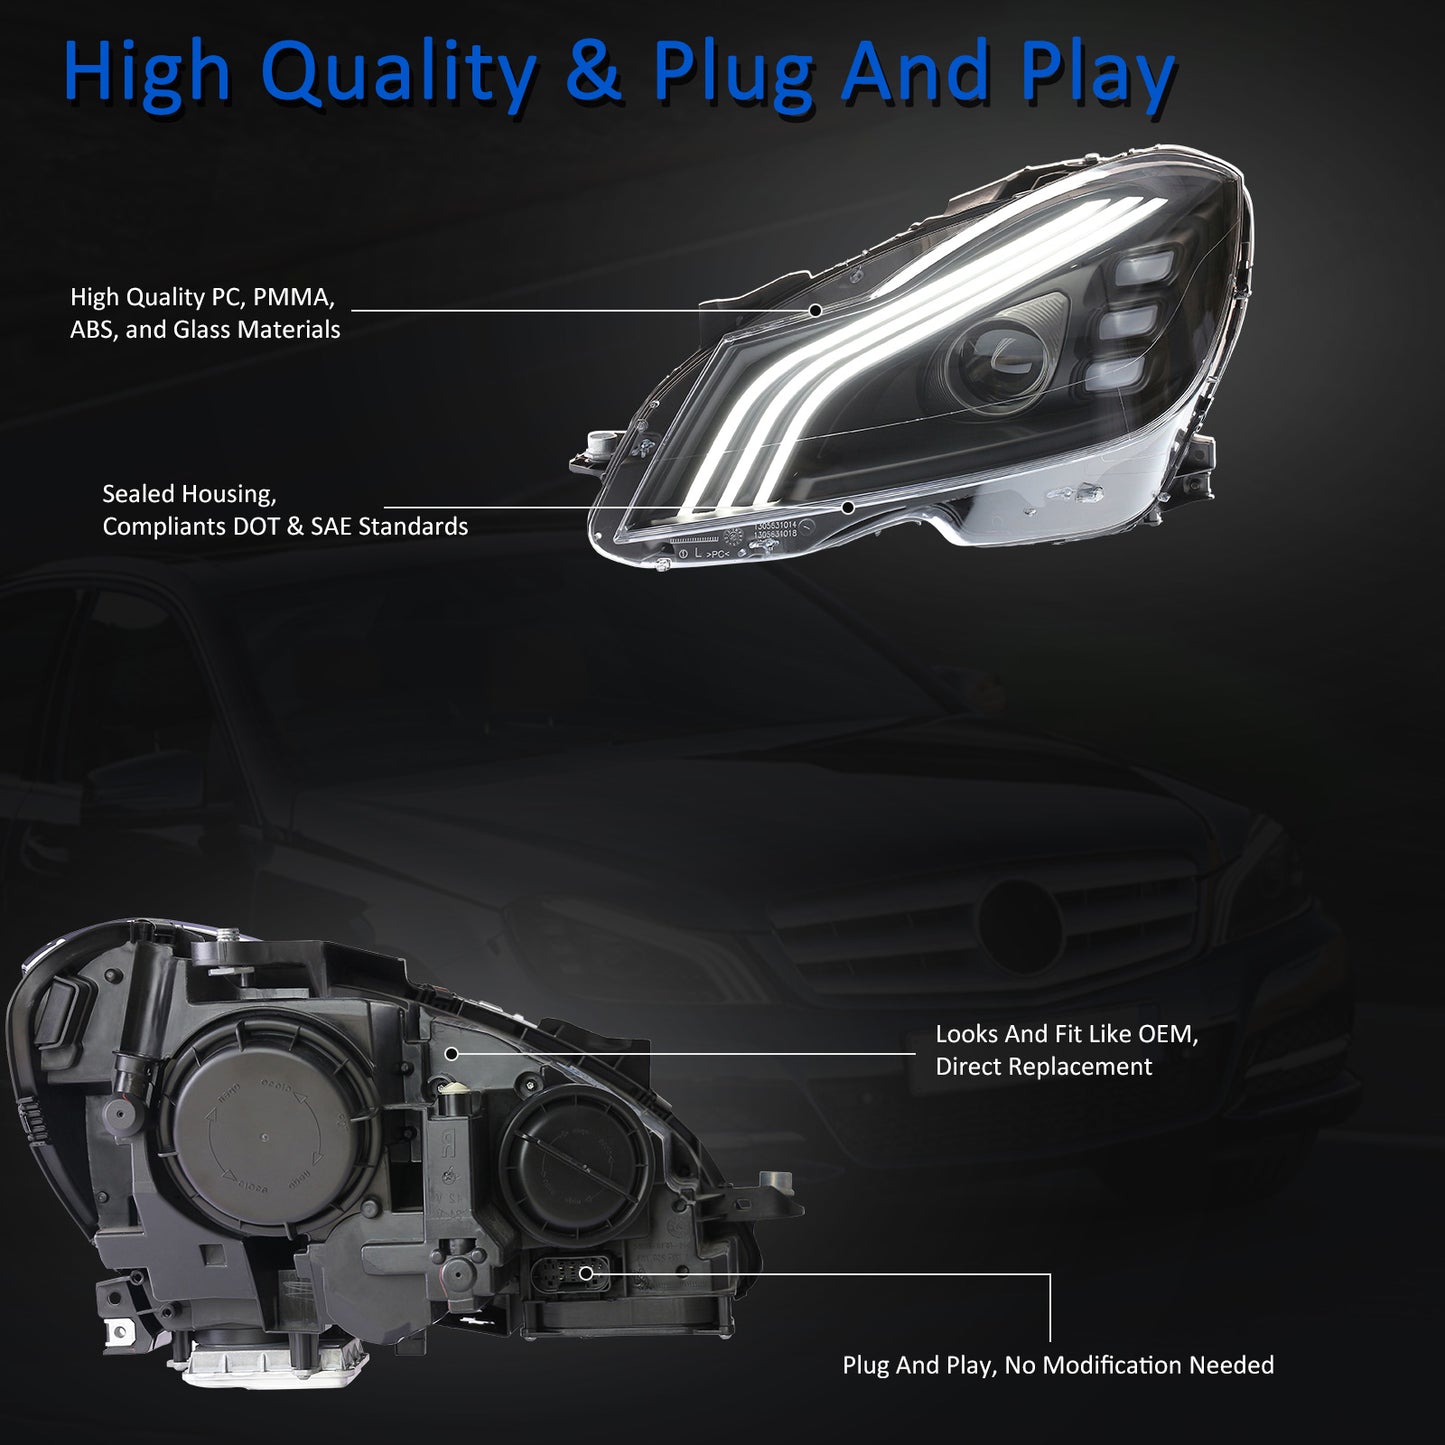 JOLUNG Full LED Headlights Assembly For Mercedes Benz W204 C180 C200 C-Class 2011-2014